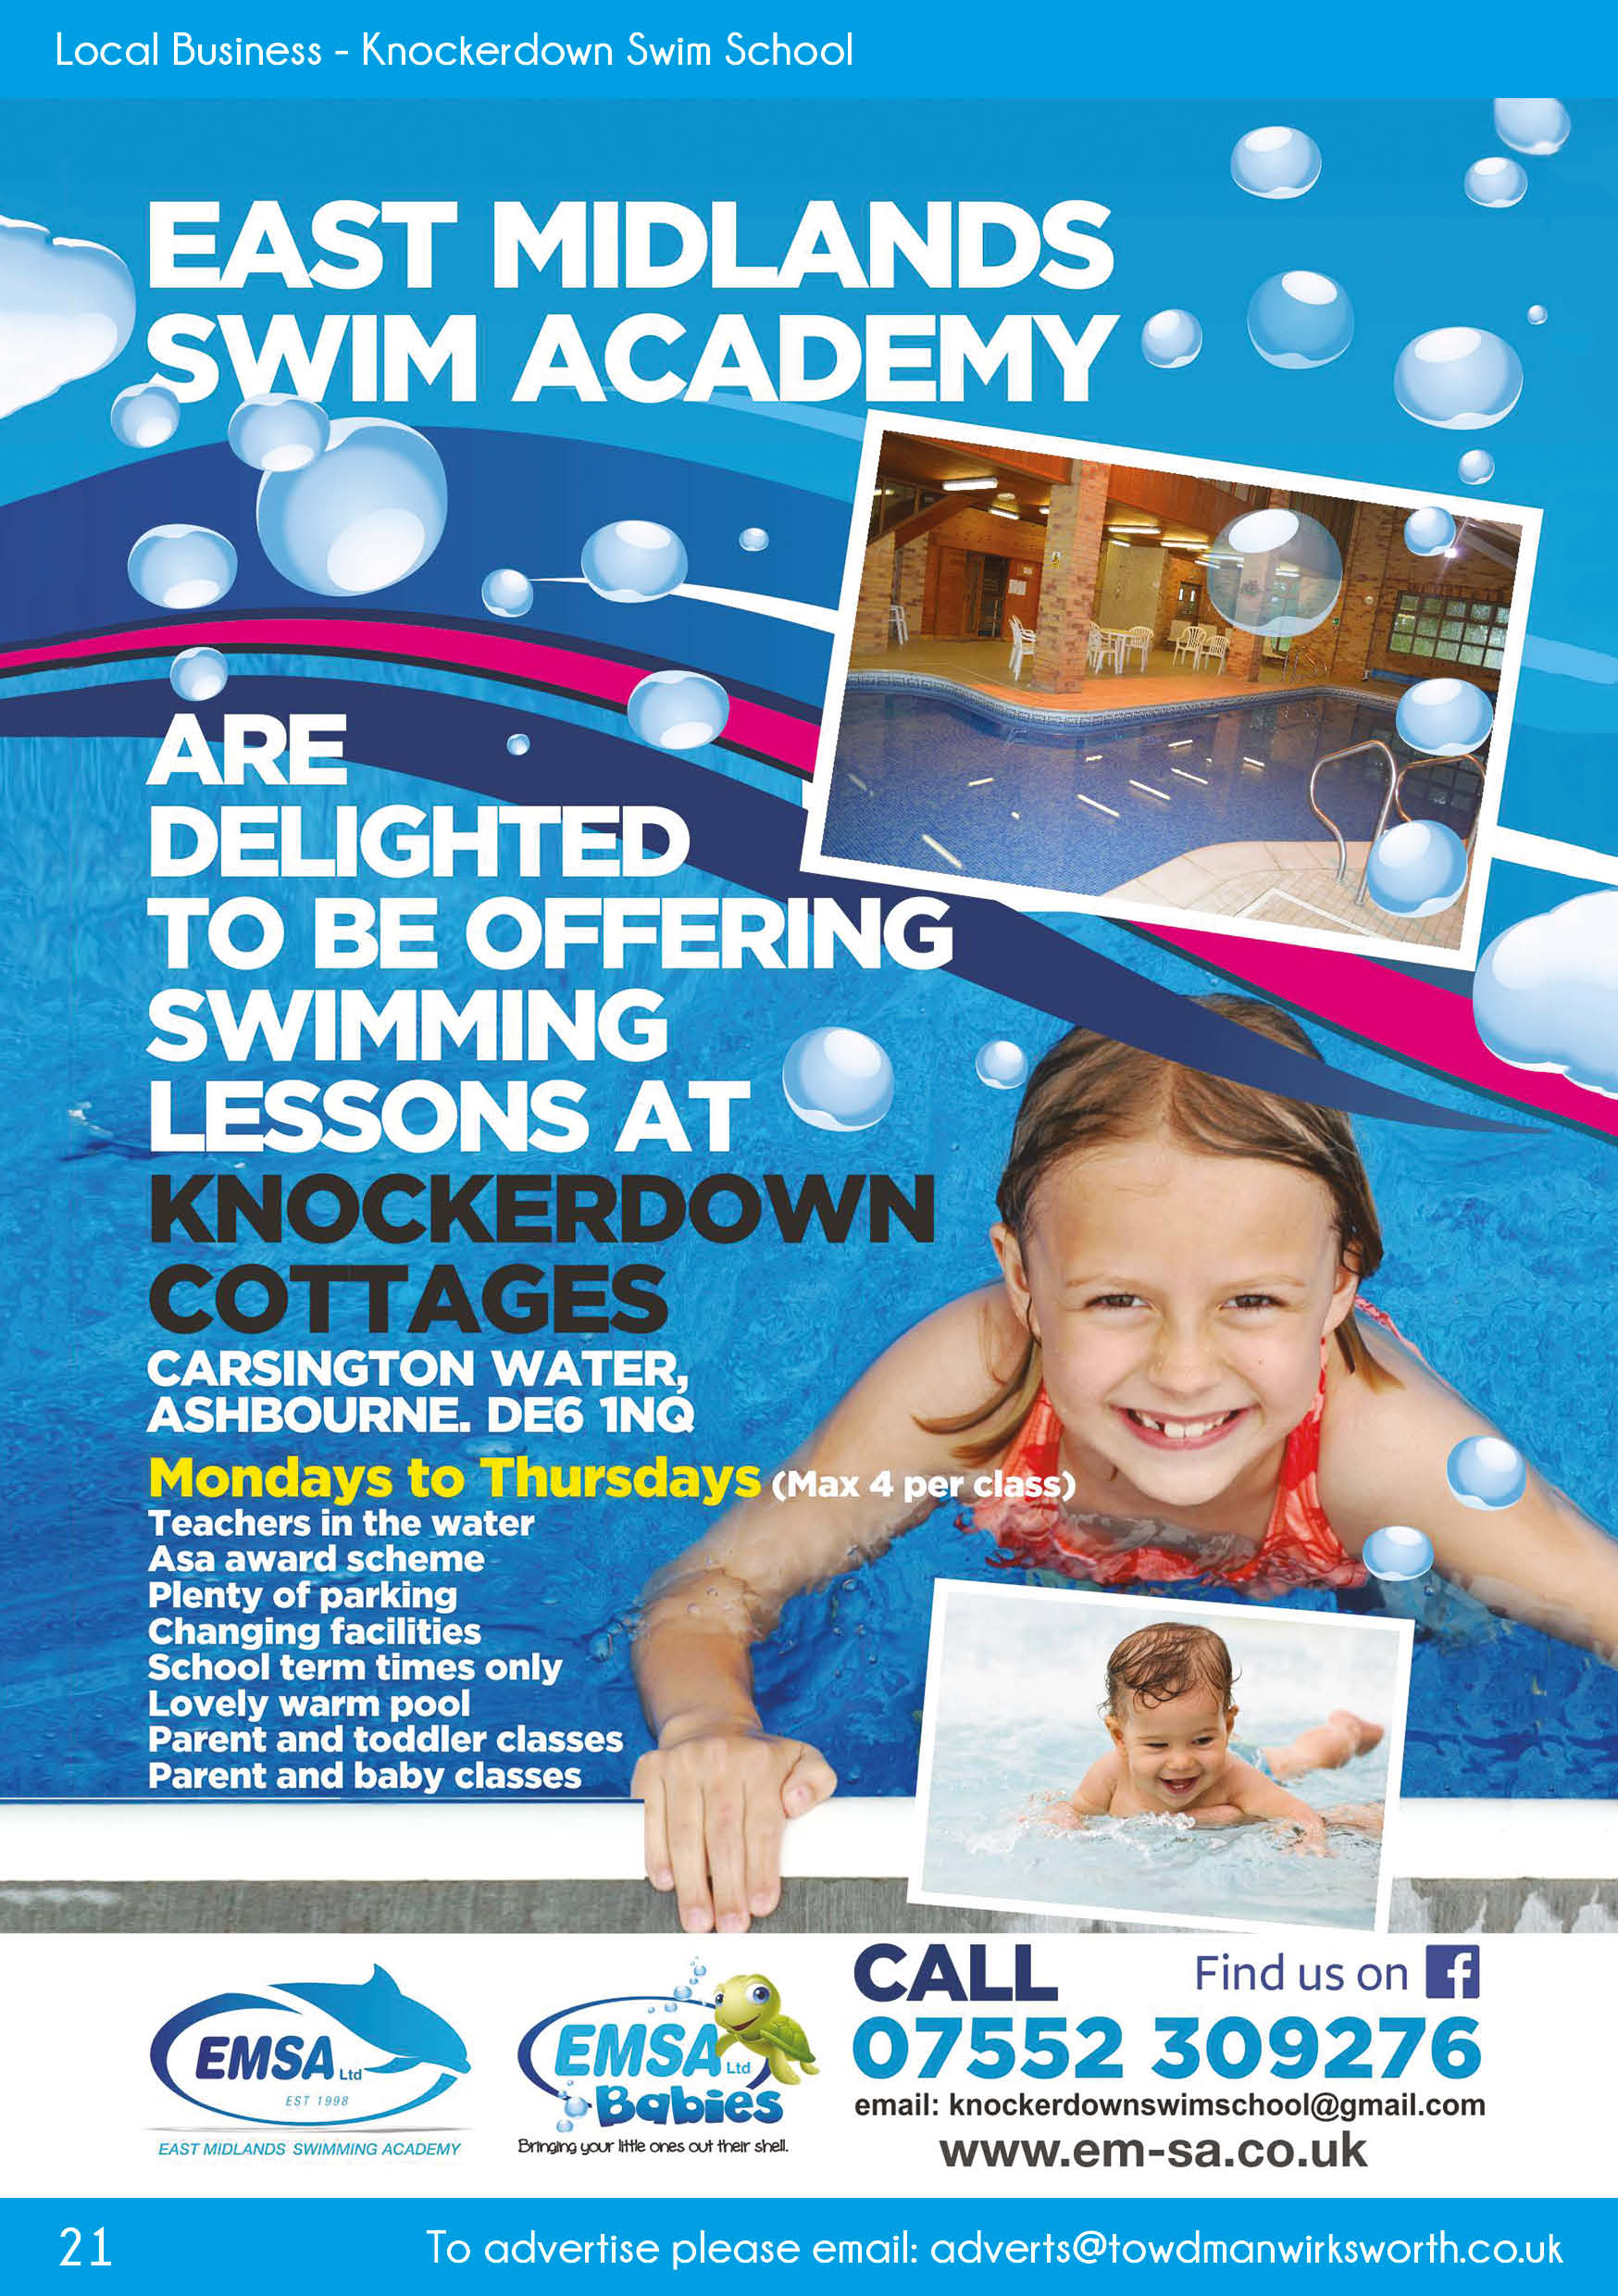 Knockerdown Swim School